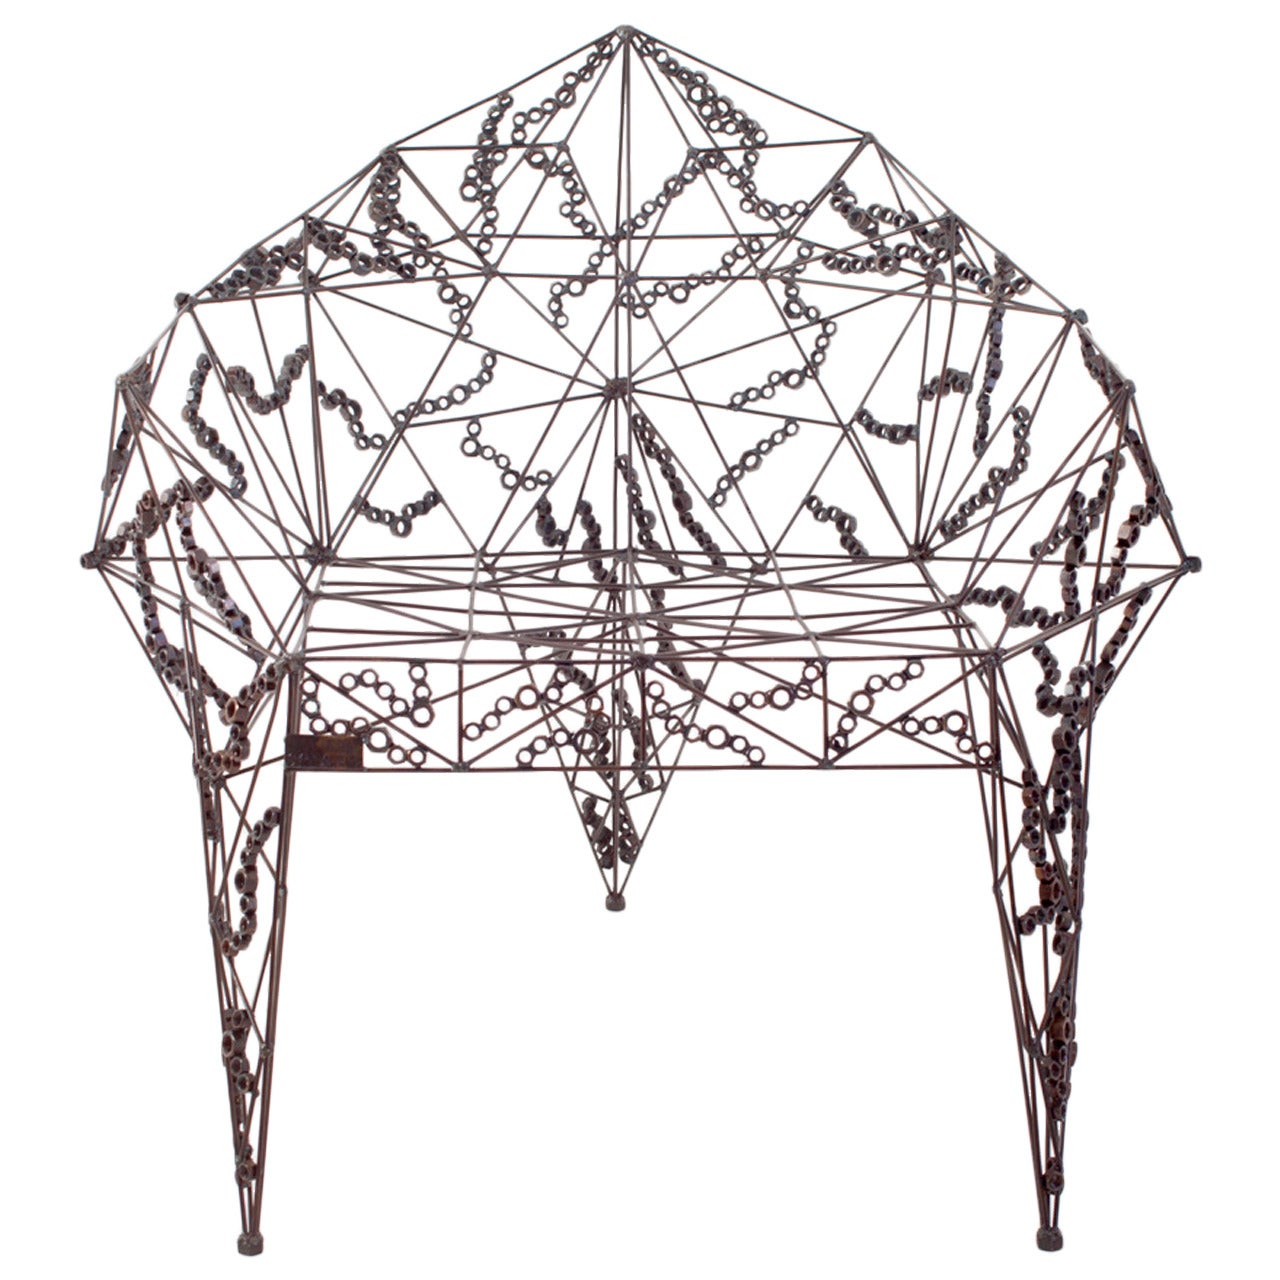 Baltasar Portillo "Mechanika" Functional Art Chair